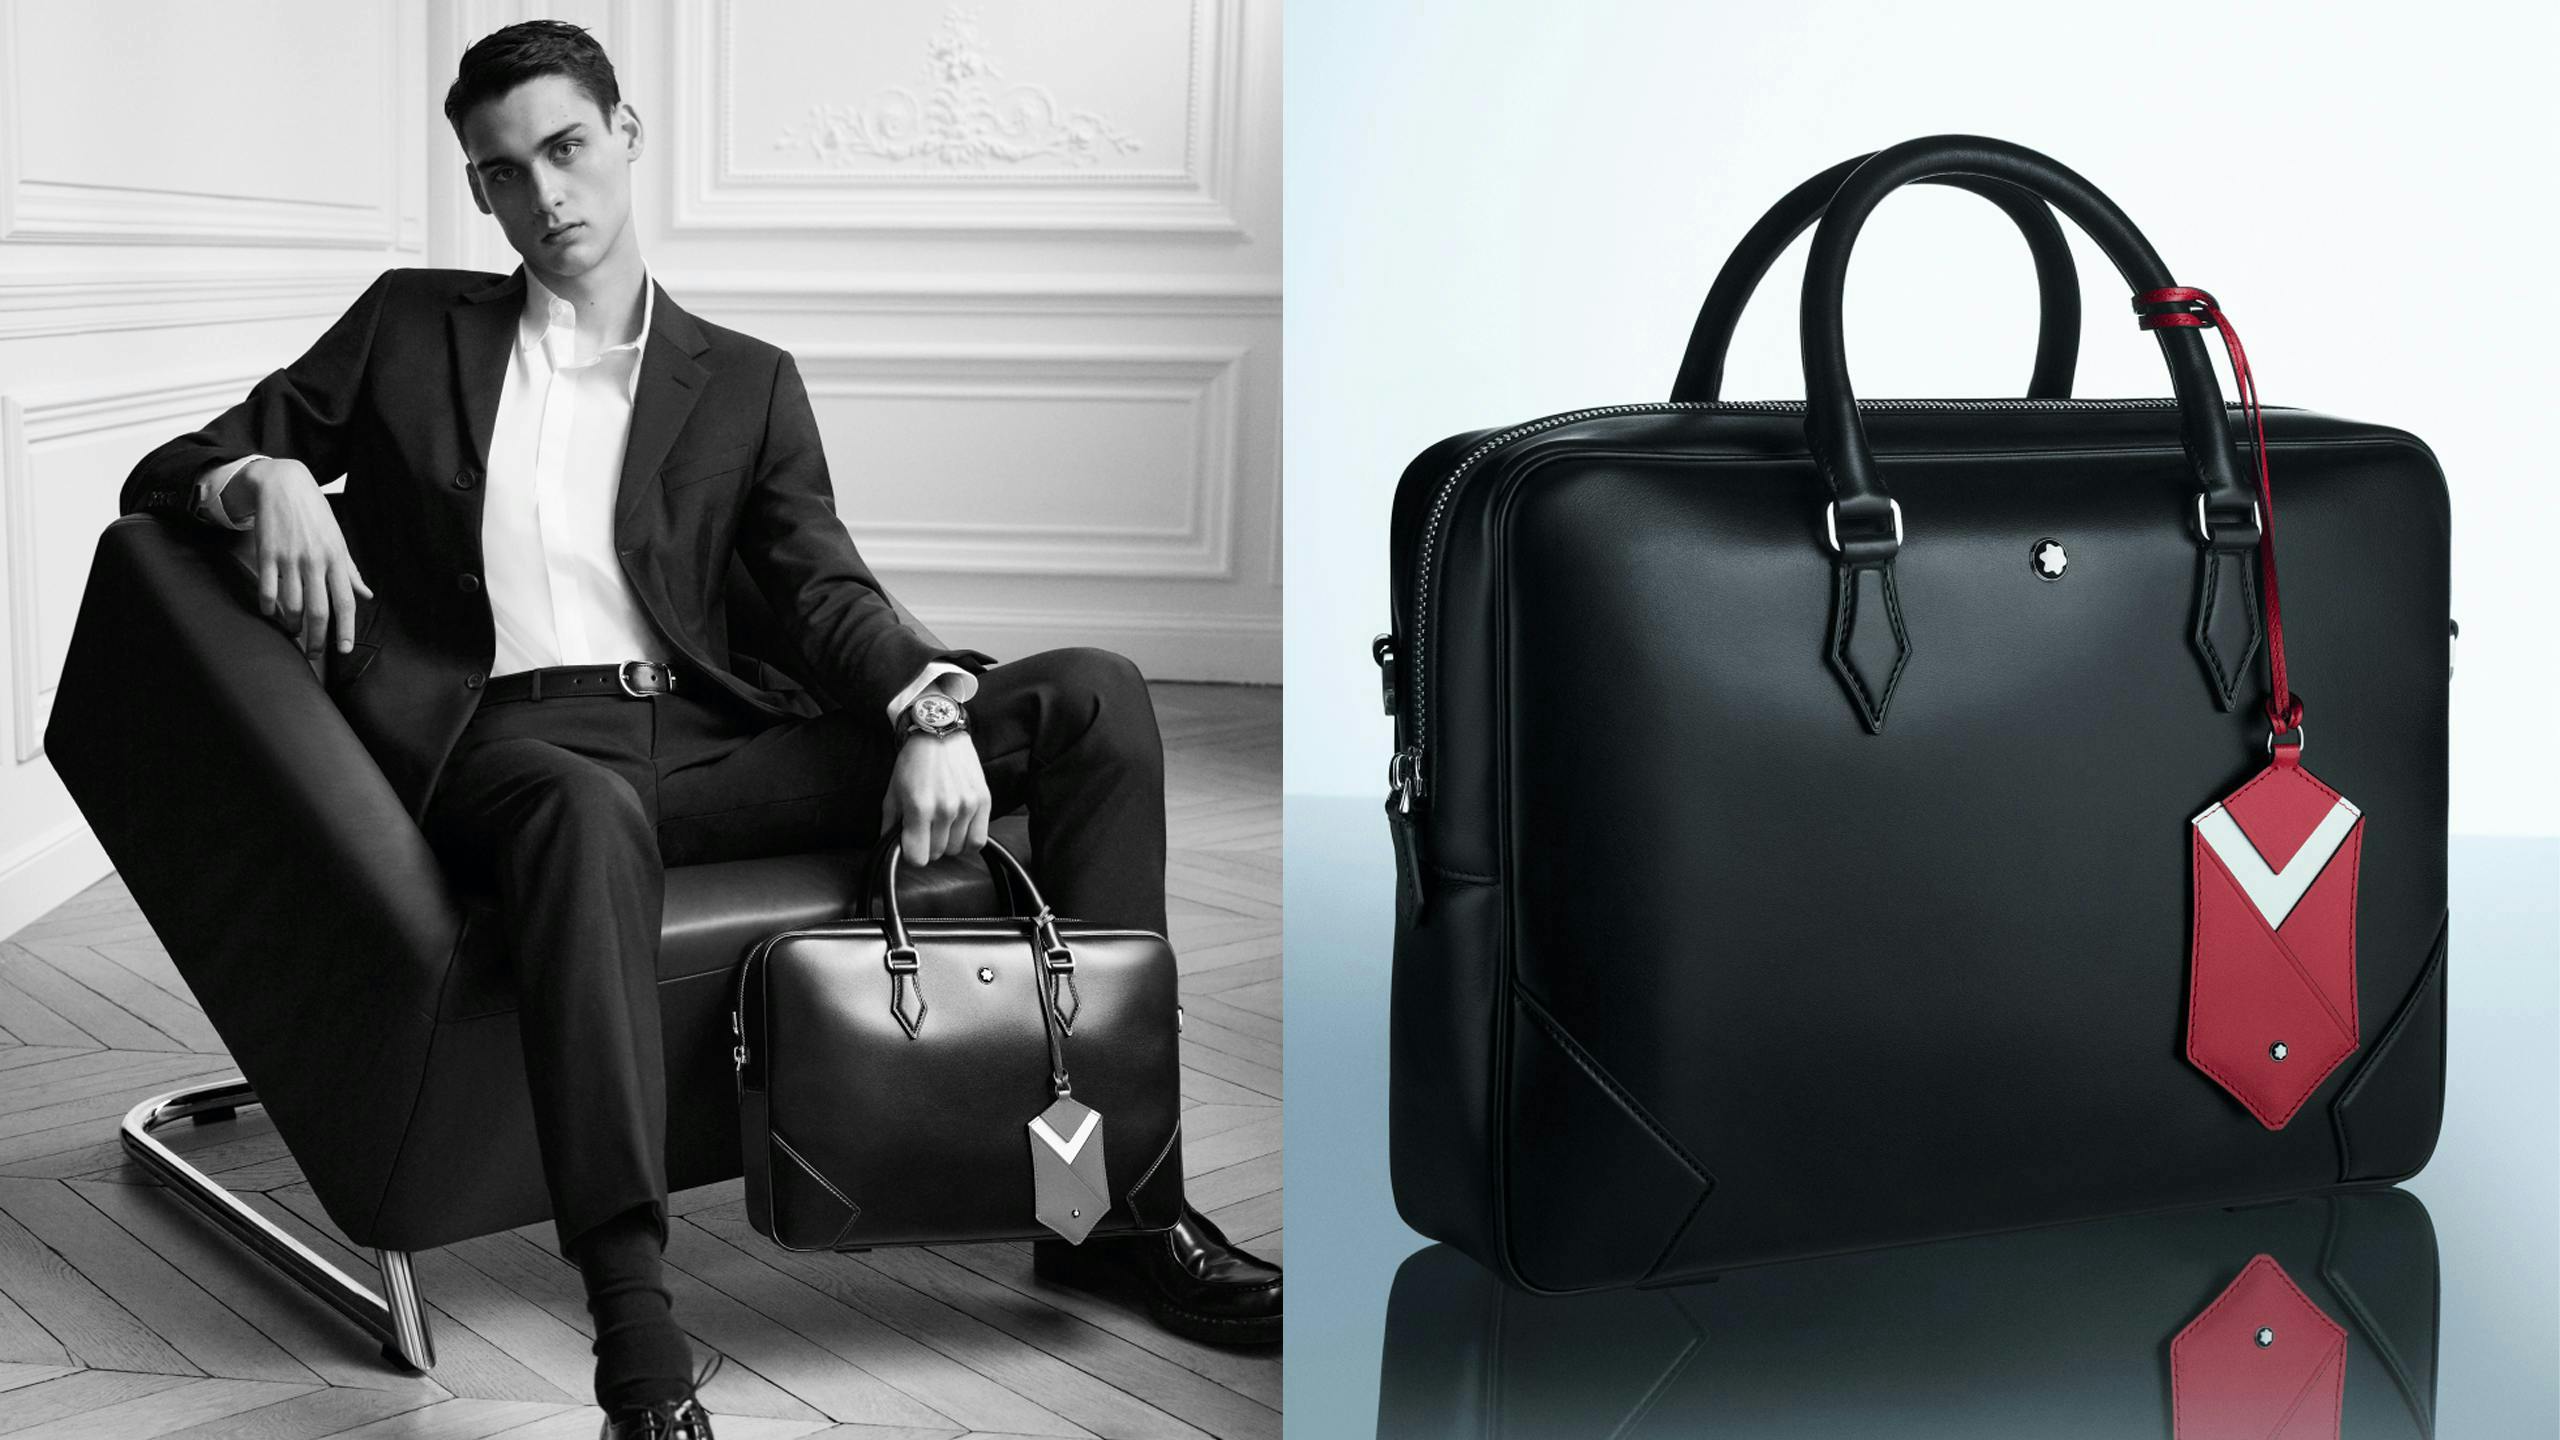 handbag accessories accessory bag briefcase person suit clothing coat overcoat